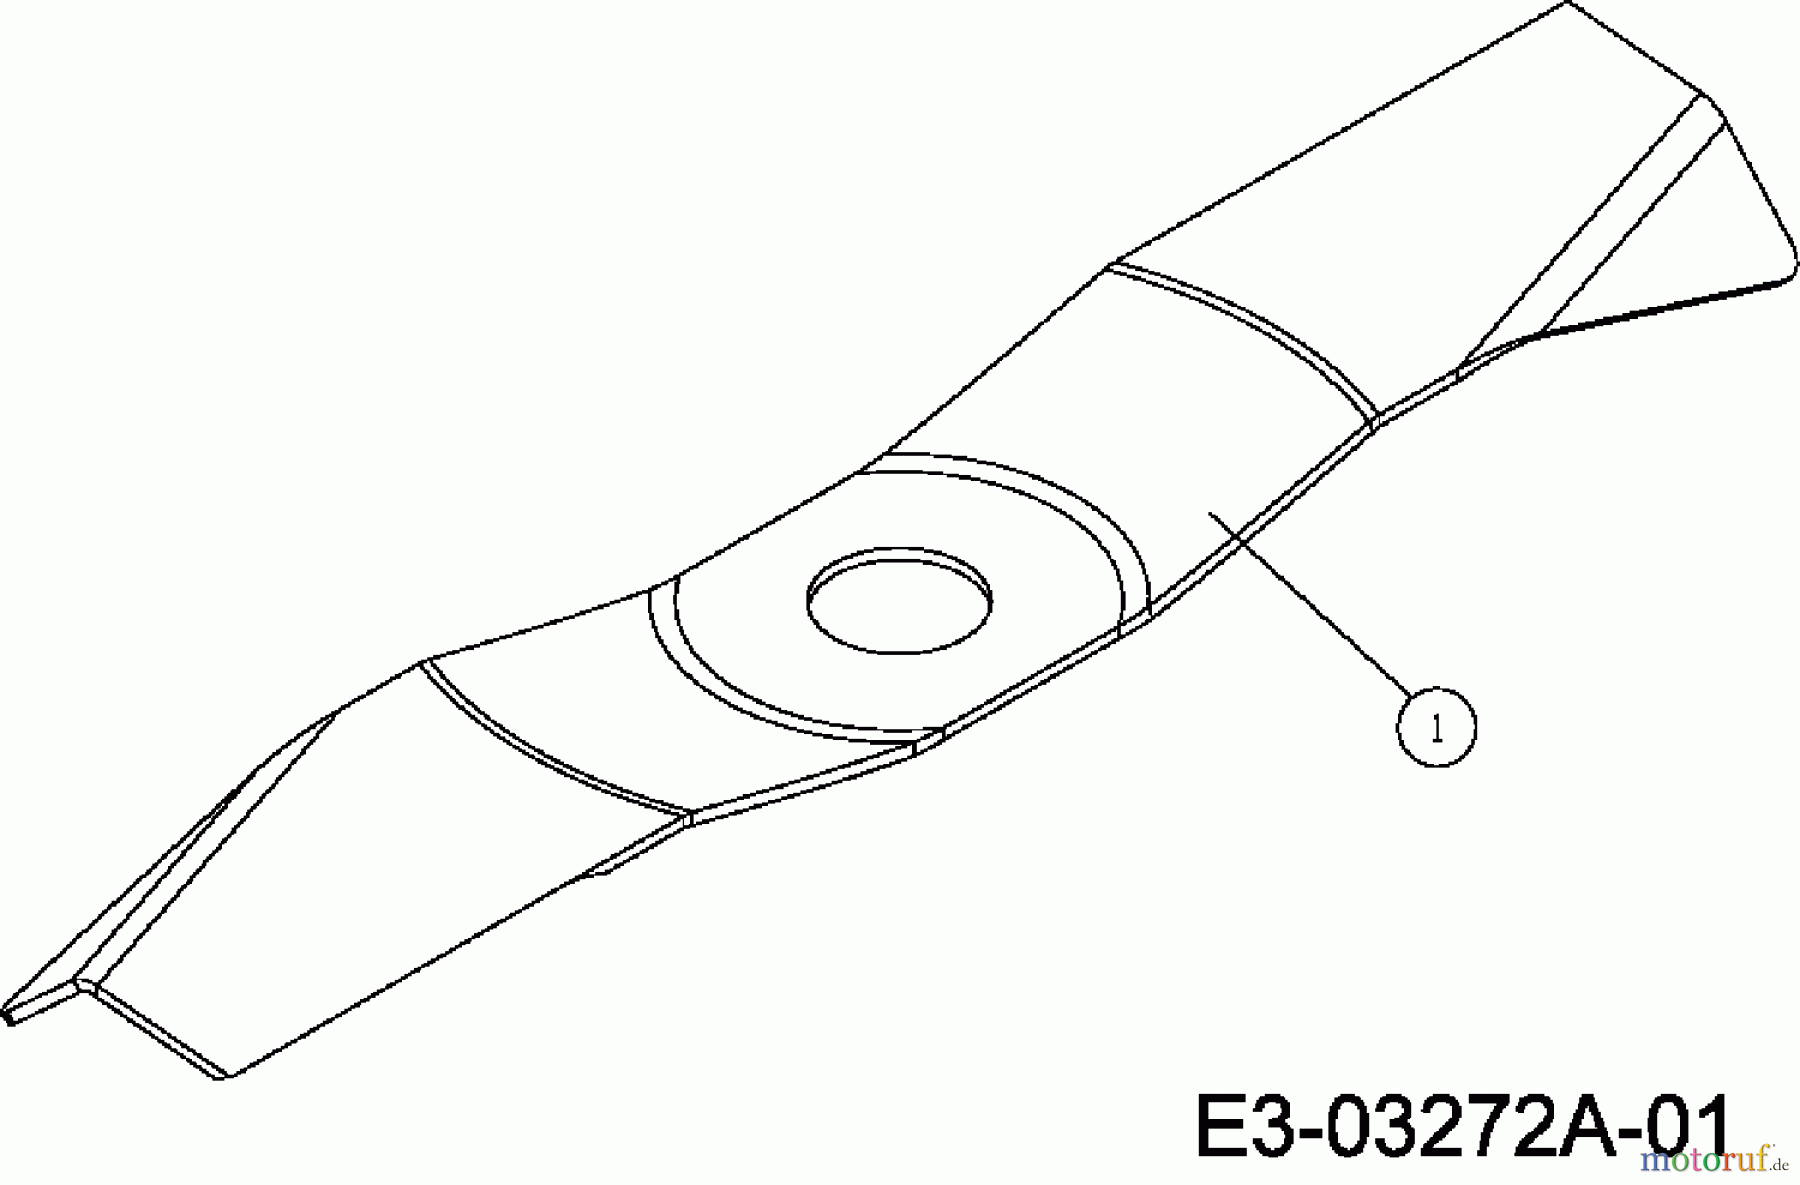  Garda Elektromäher GER 400 18C-N4S-666  (2007) Messer